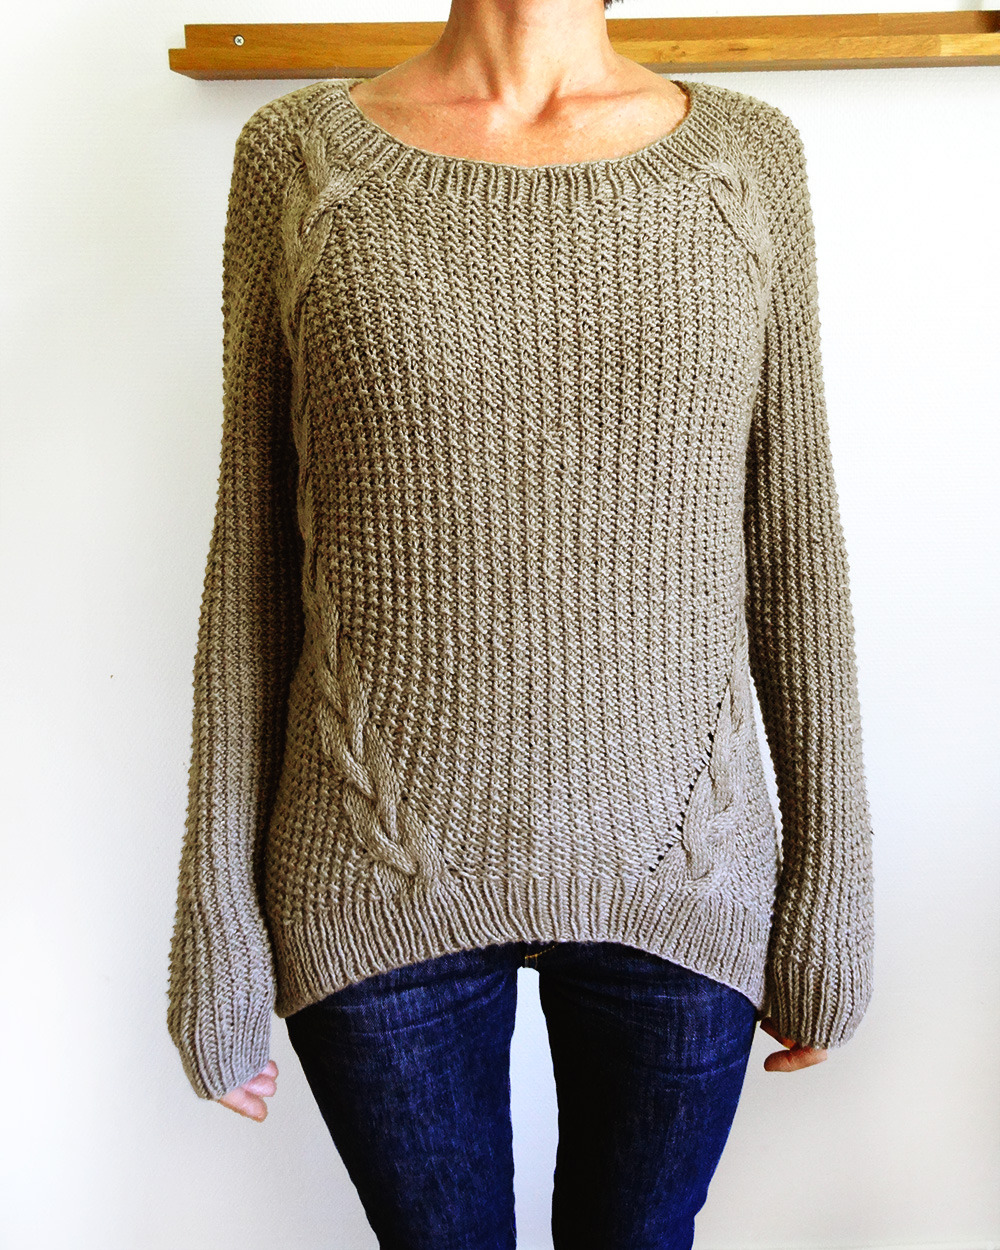 Handy Kitty • Fall fashion knit Dagmar sweater, cable knit...